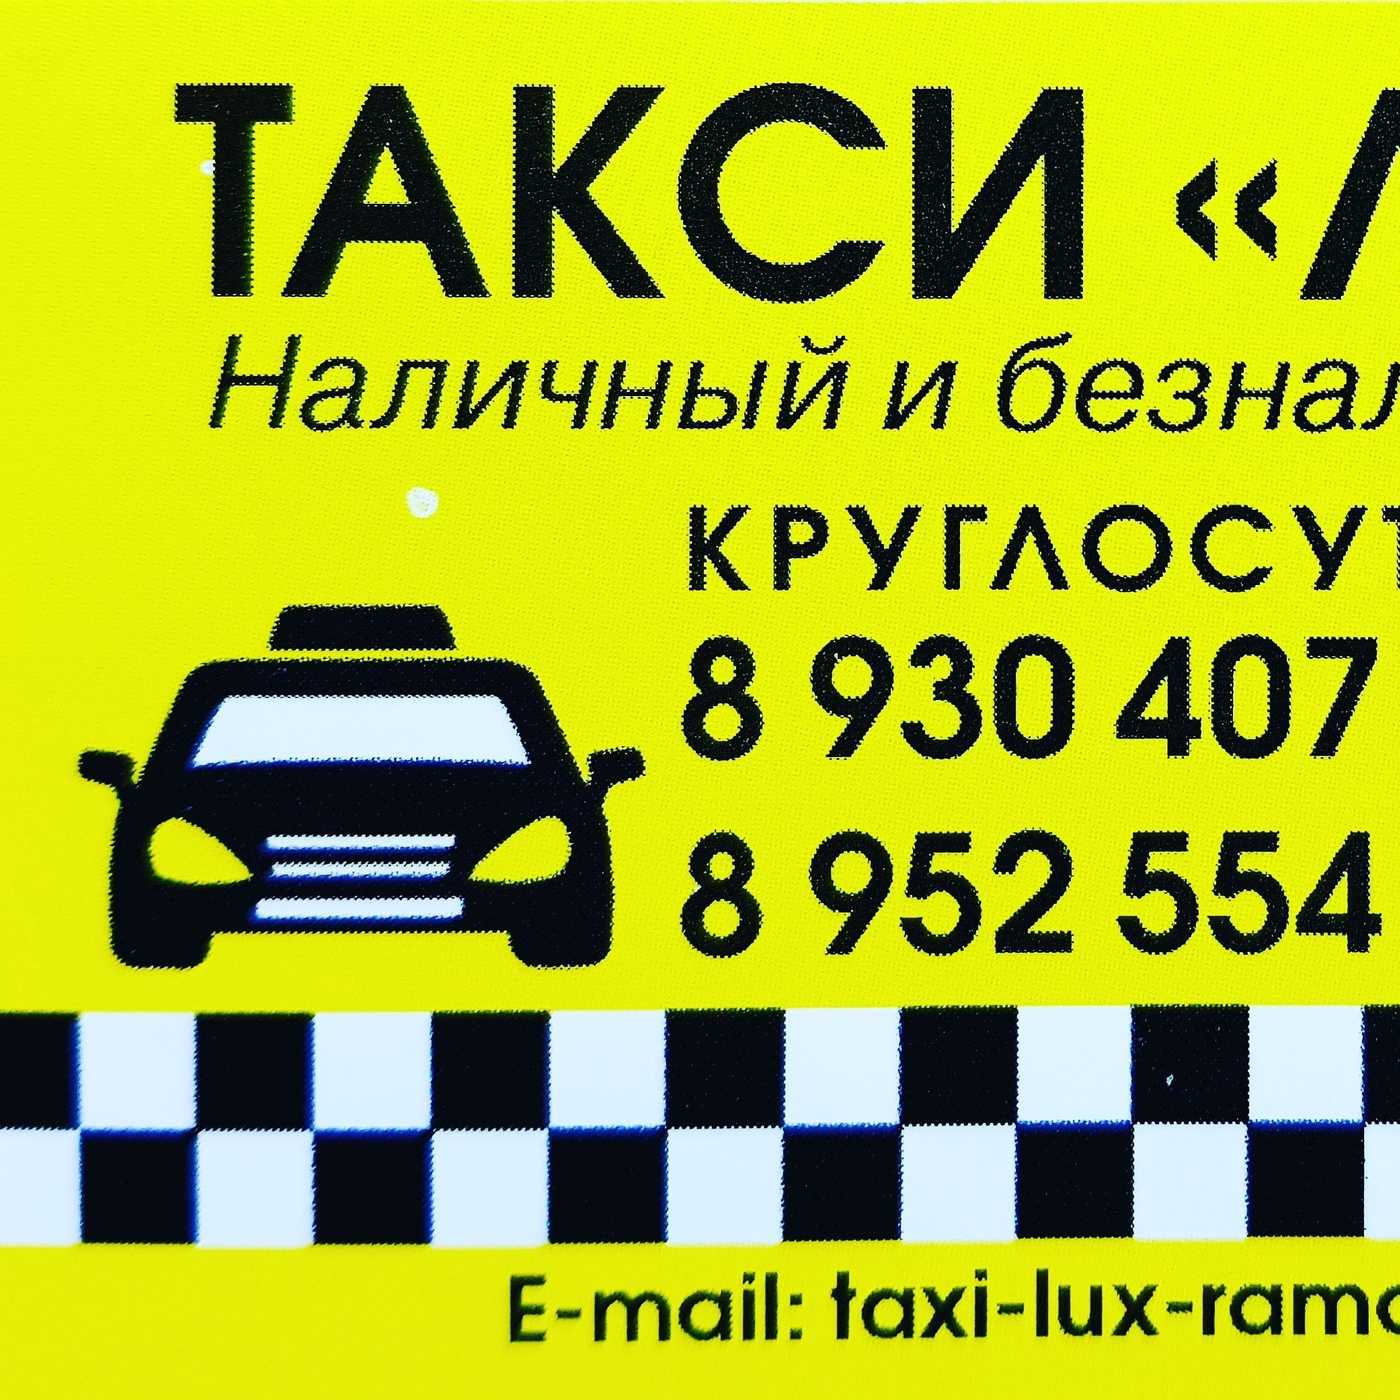 Калтан такси телефон. Такси Люкс. Номер такси. Номера таксистов. Такси Люкс номер телефона.